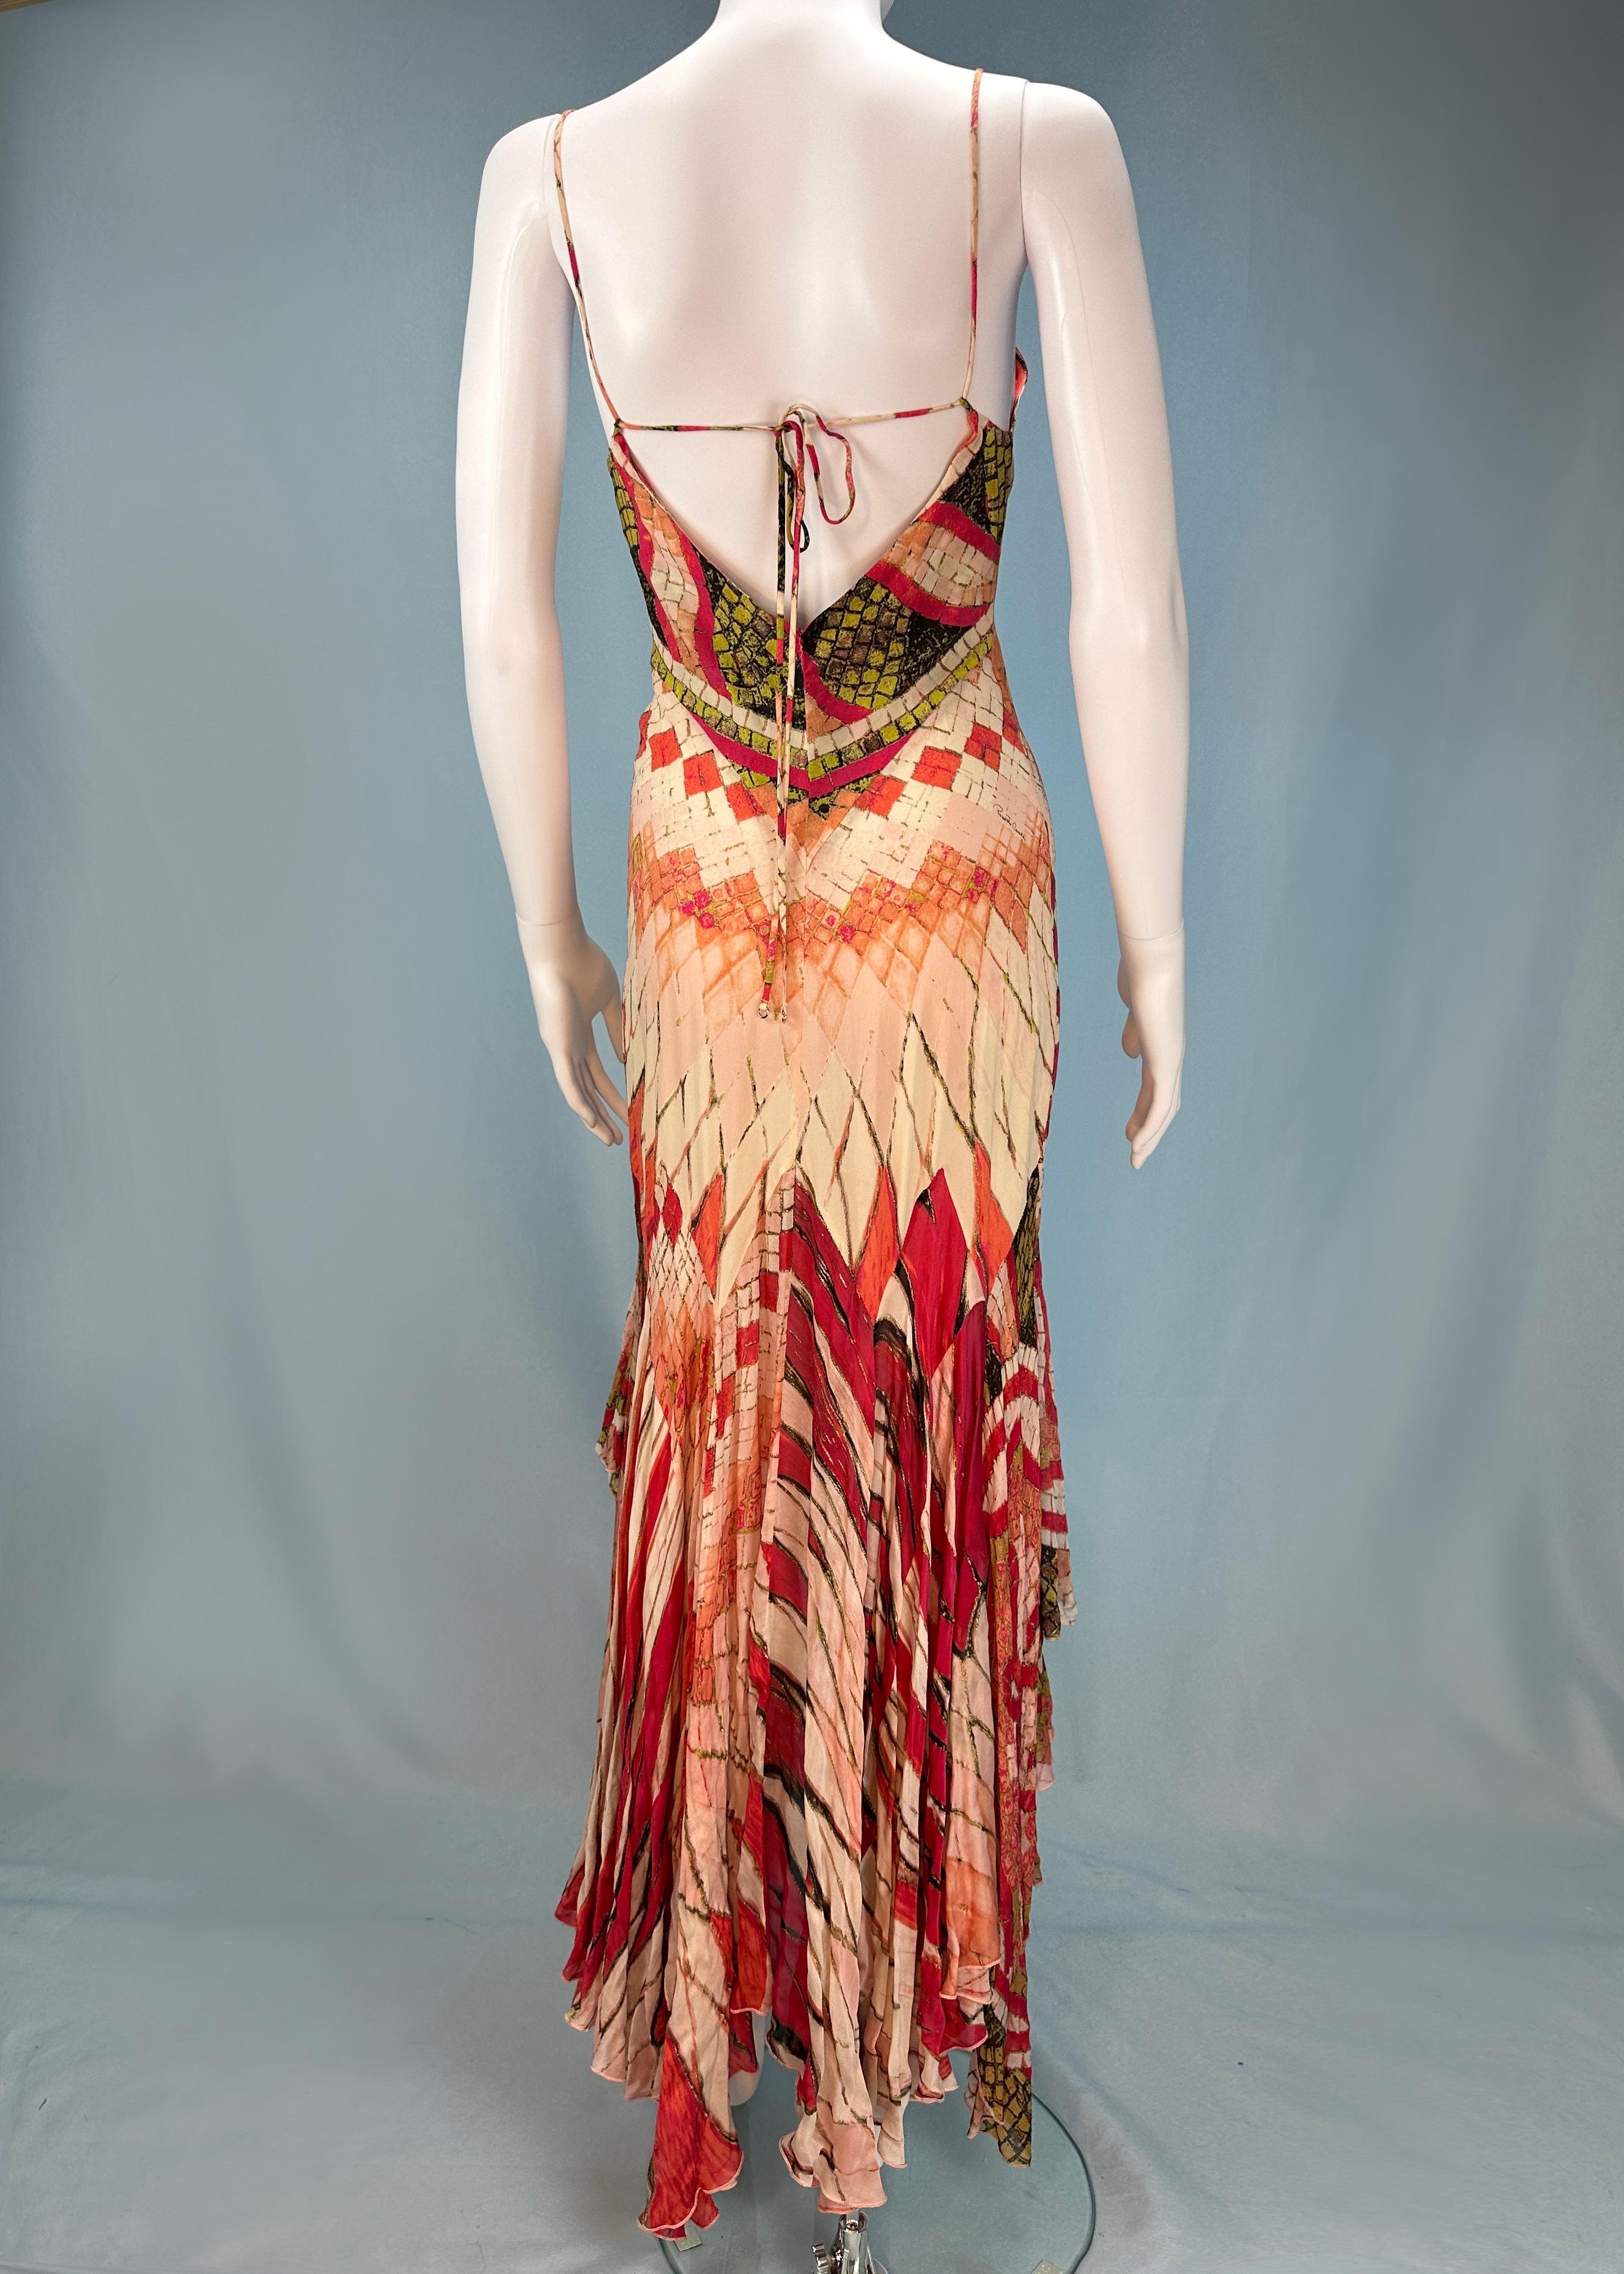 Roberto Cavalli Spring 2004 Silk Ruffle Dress In Good Condition In Hertfordshire, GB